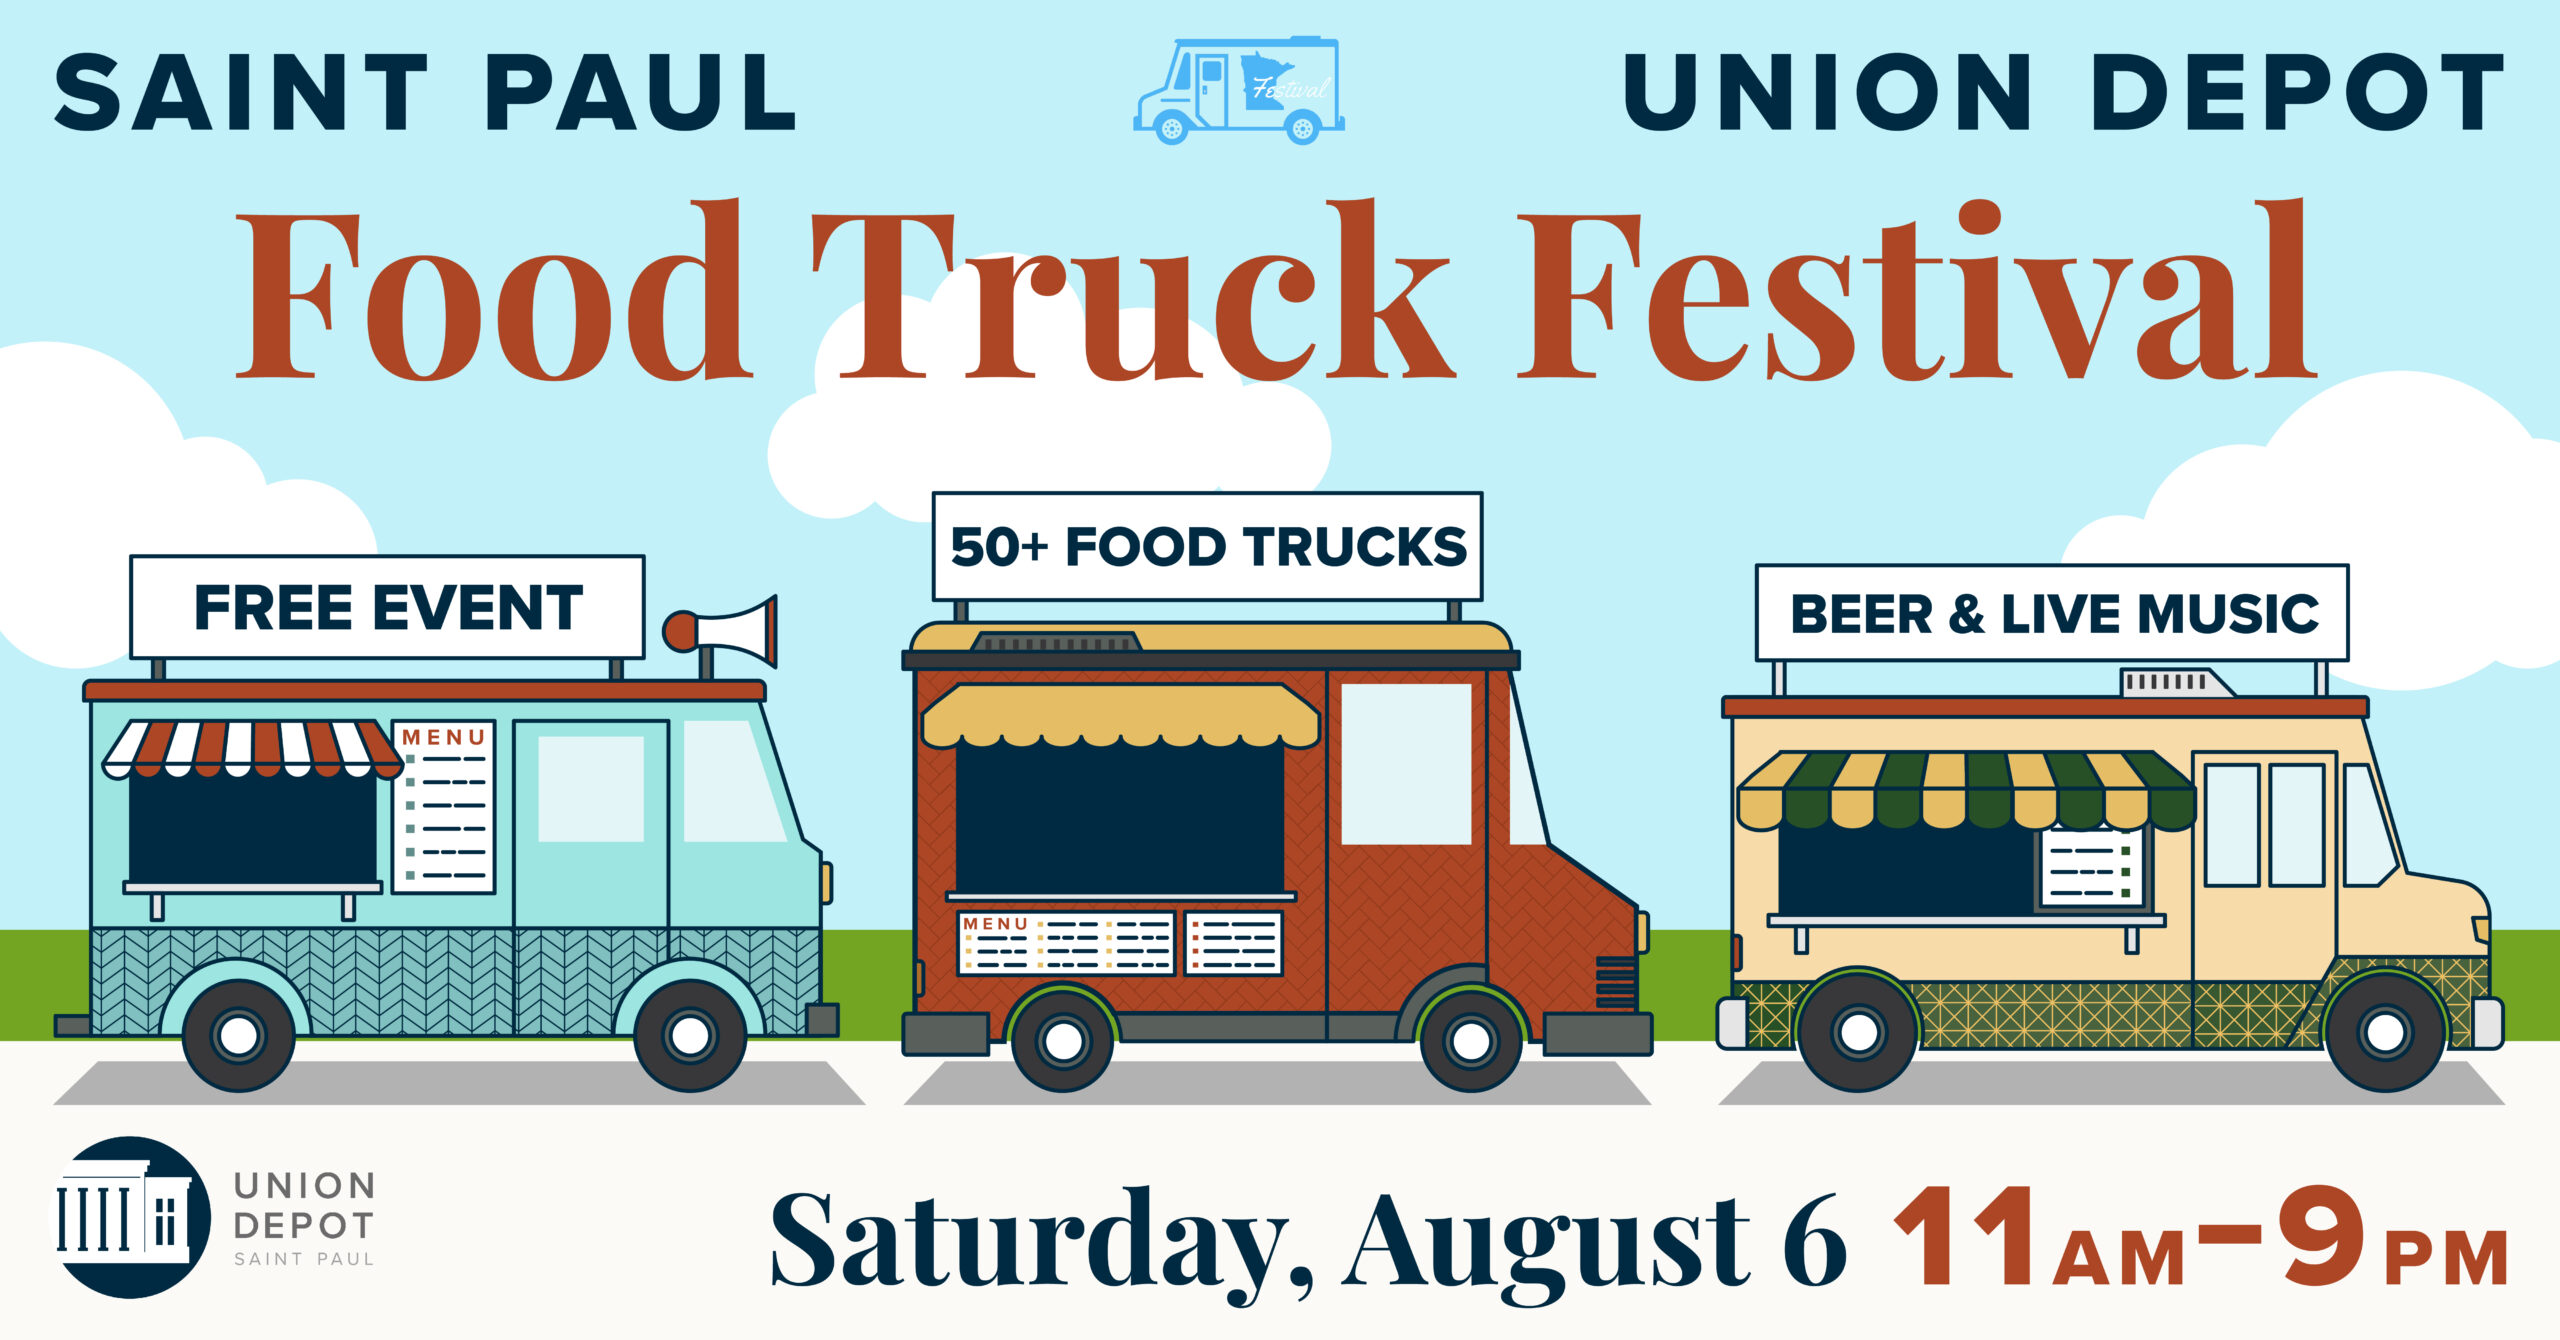 St. Paul Food Truck Festival at Union Depot UNION DEPOT